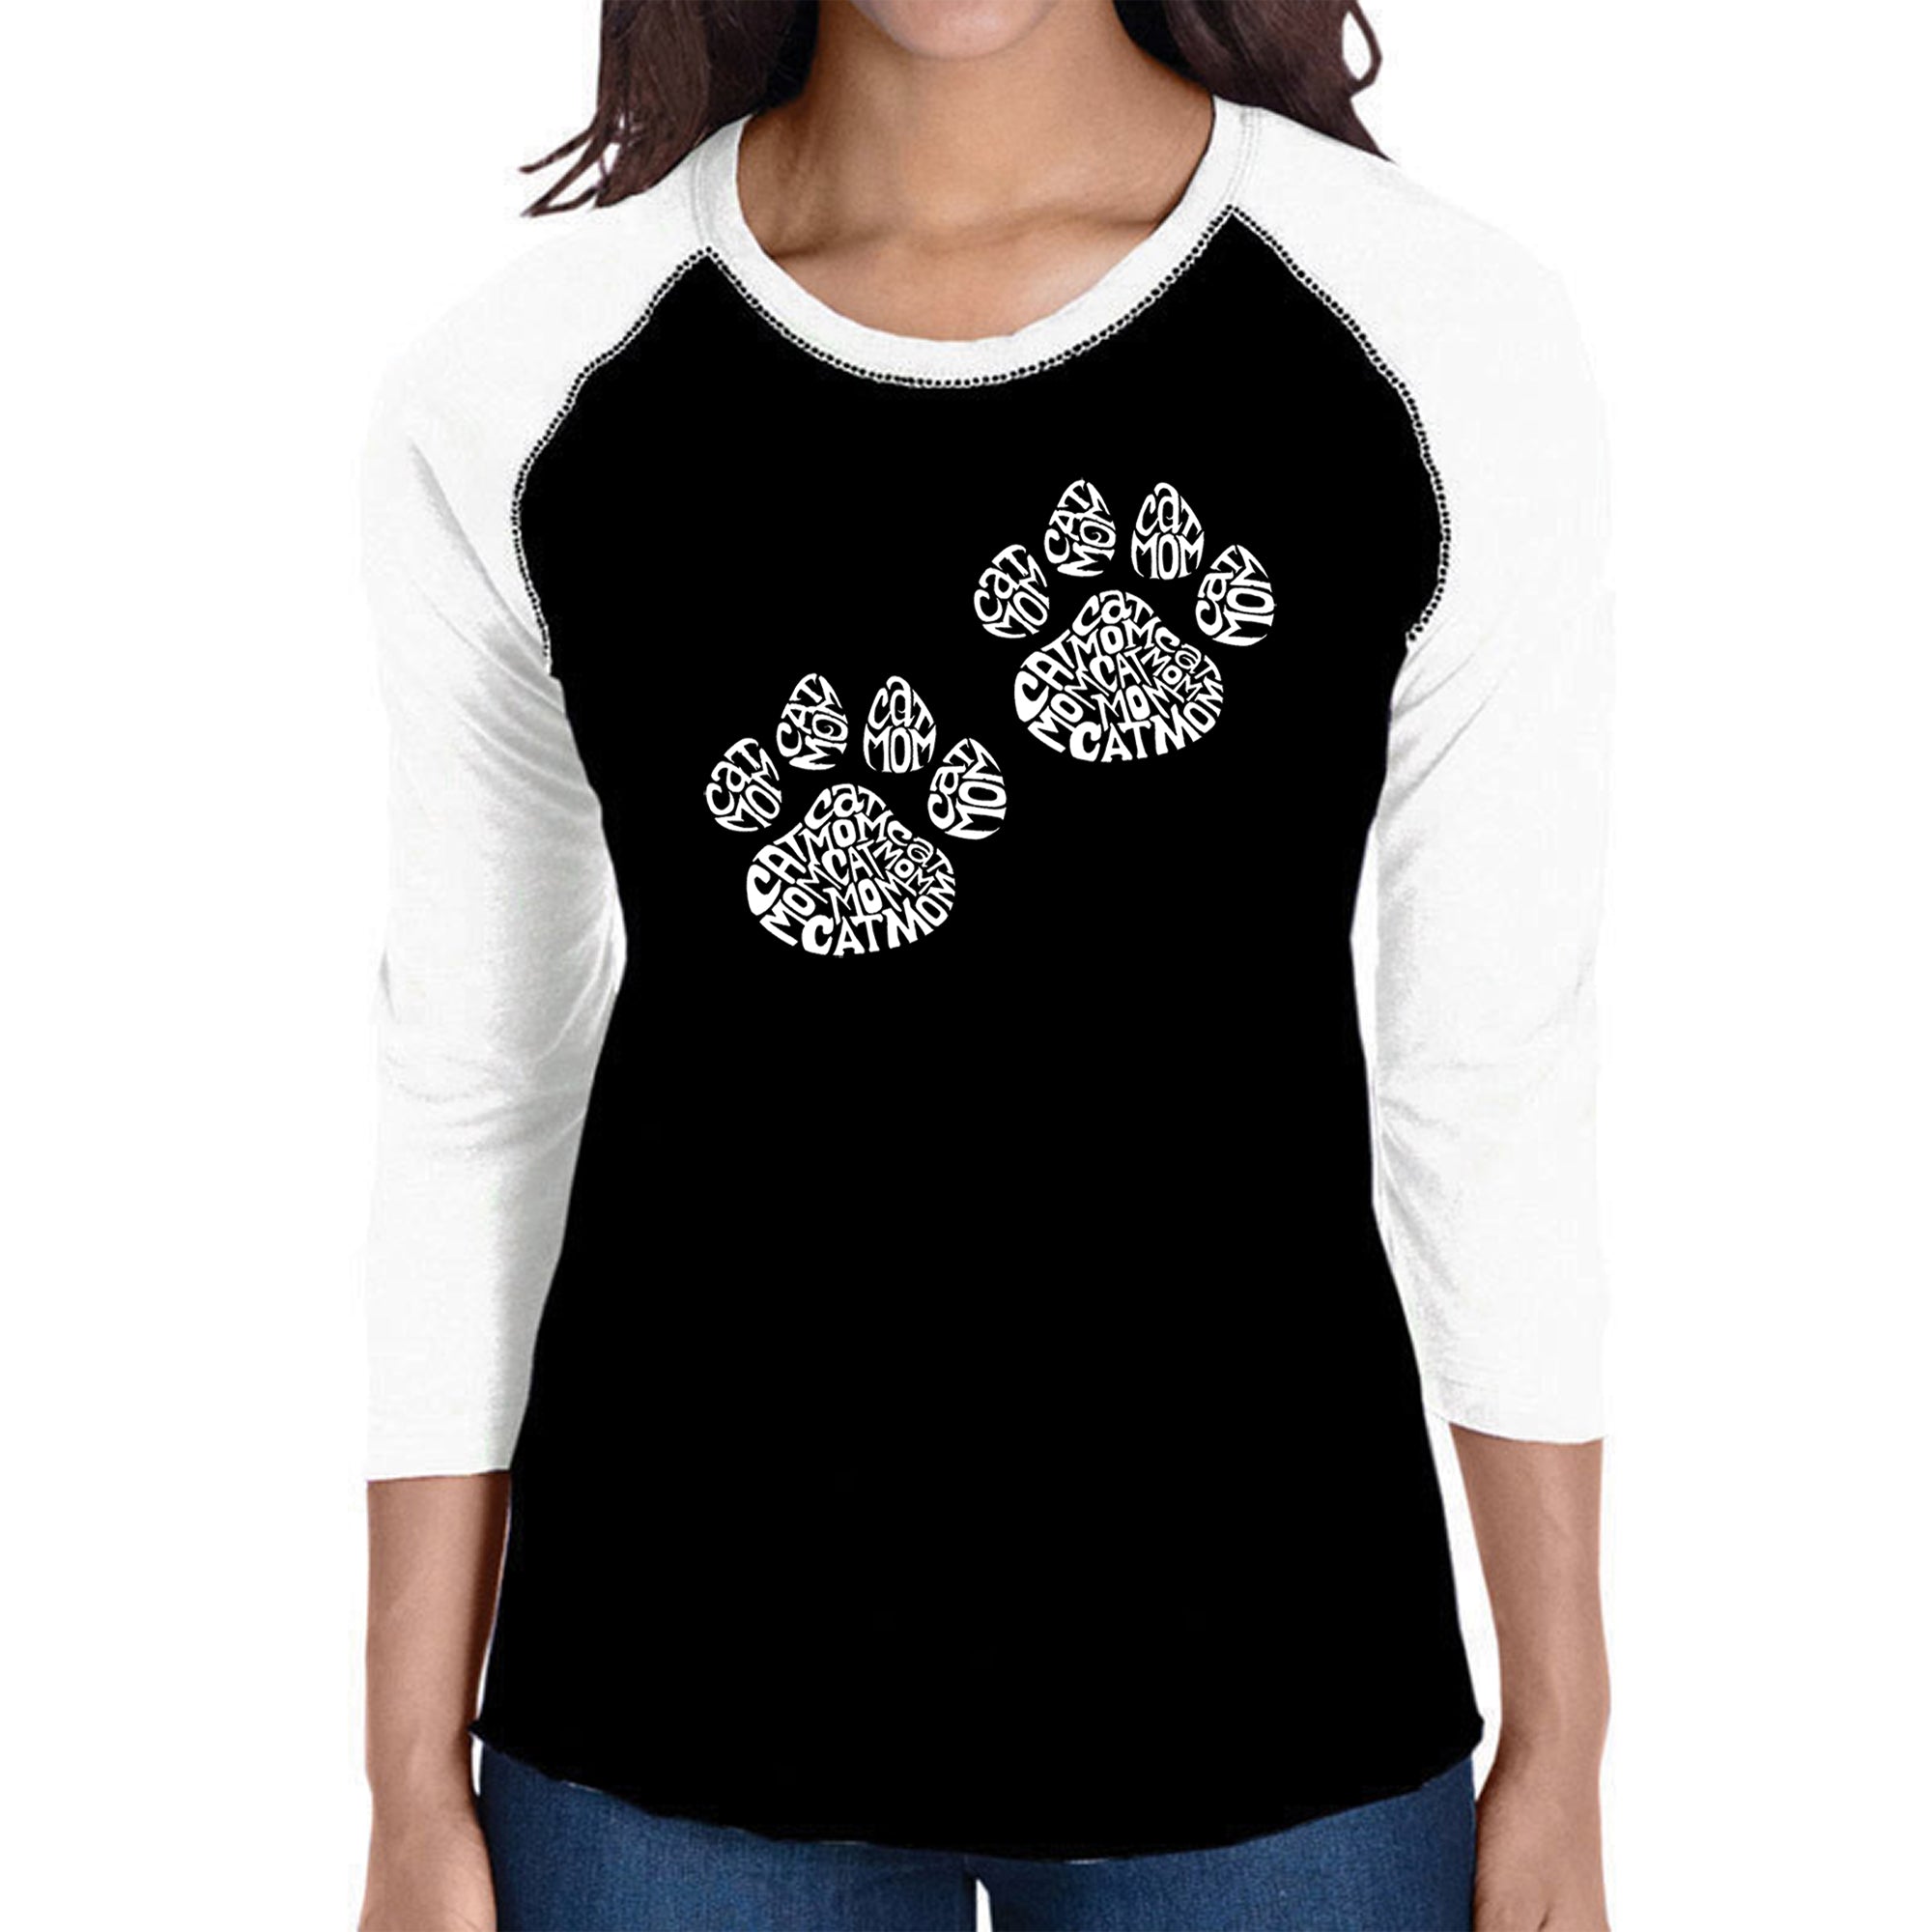 Cat Mom - Women's Raglan Baseball Word Art T-Shirt - Black/White - XX-Large